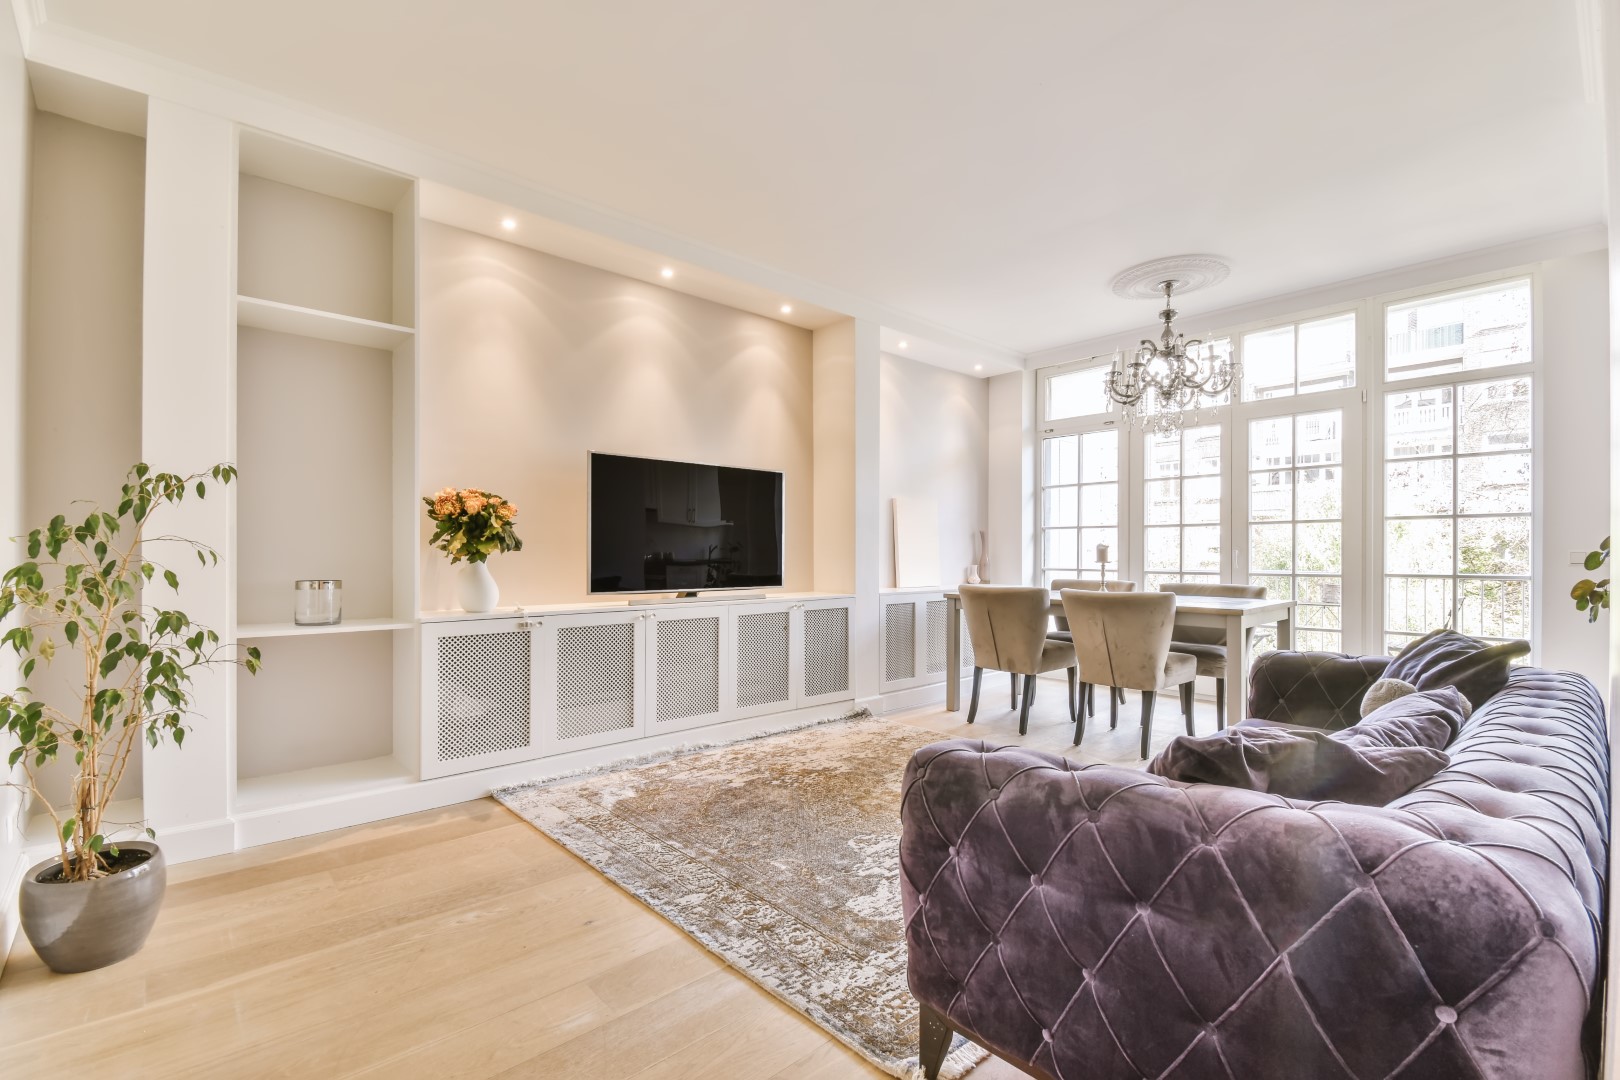 Living Room With Purple Velvet Sofa 2021 12 09 14 14 00 Utc